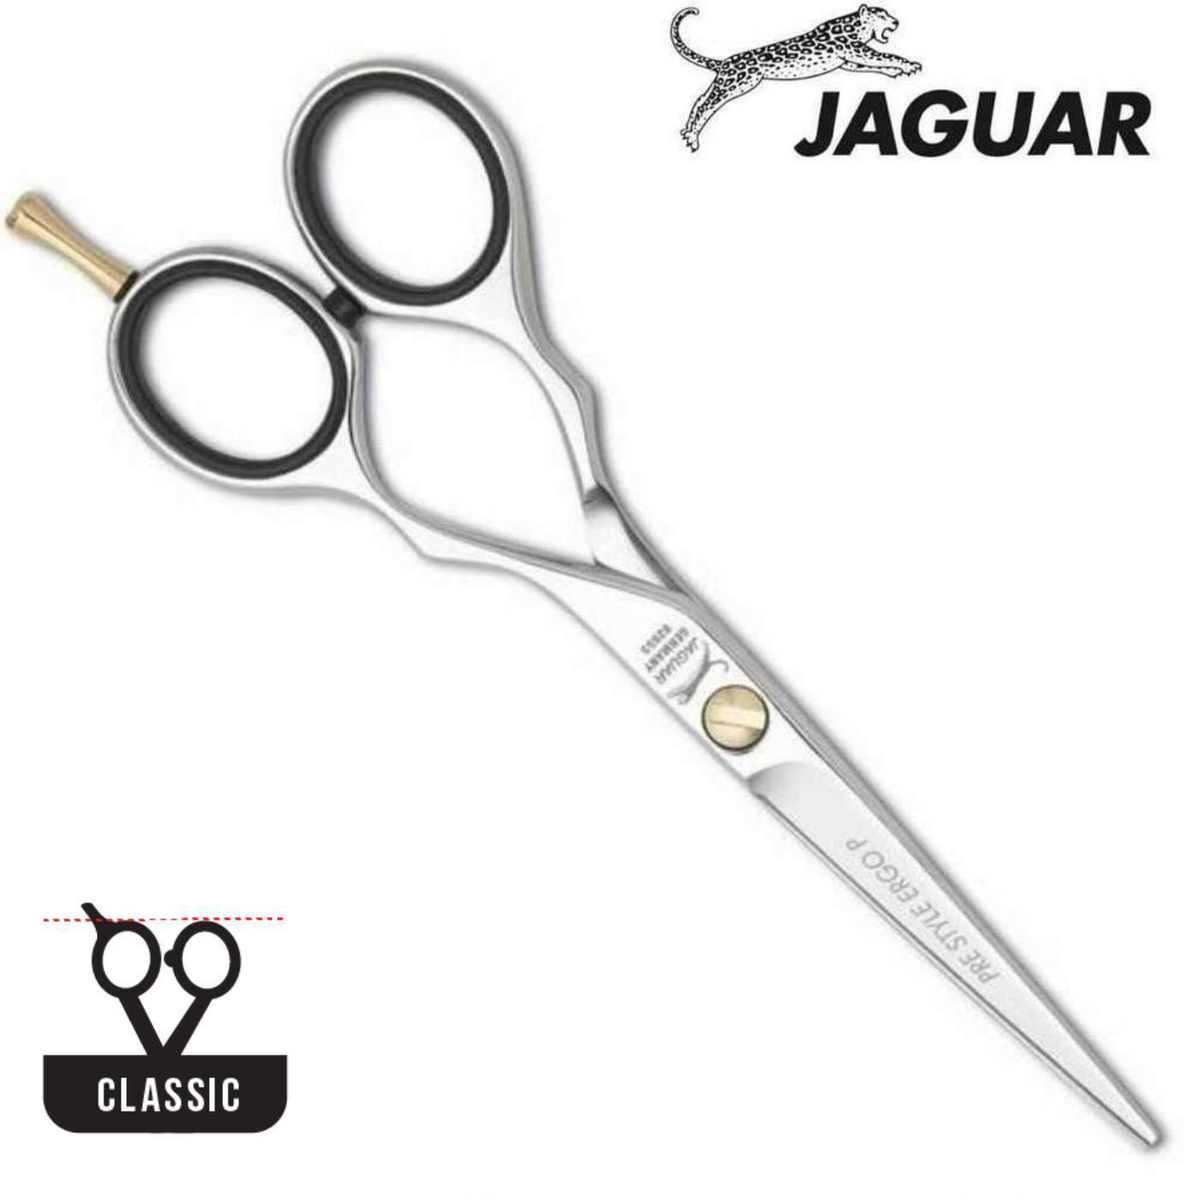 Jaguar Pre Style Ergo Scissors